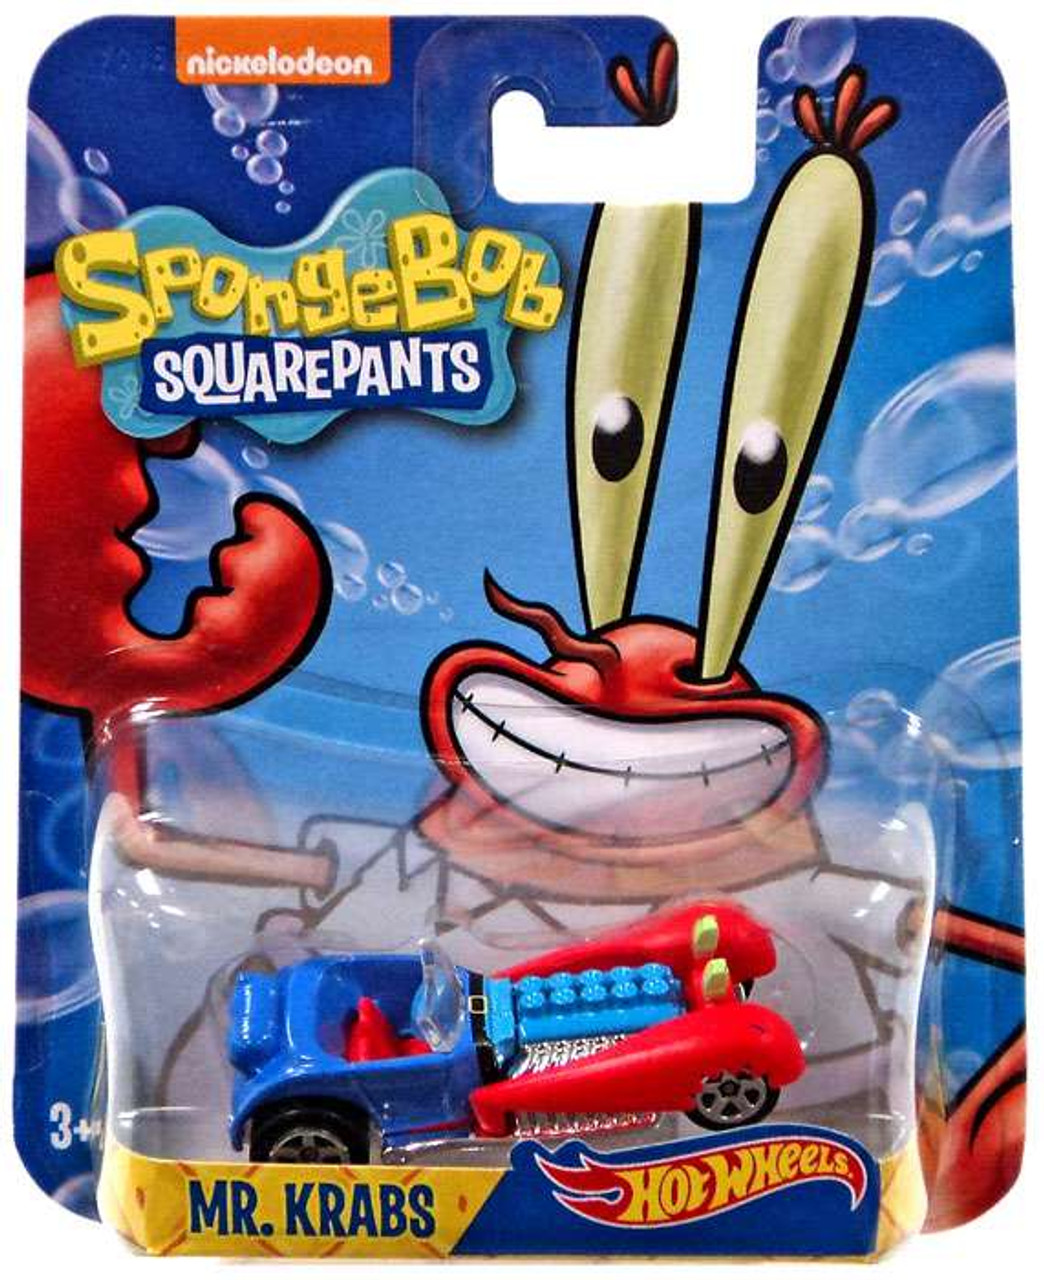 Hot Wheels Spongebob Squarepants Mr. Krabs Diecast Character Car 